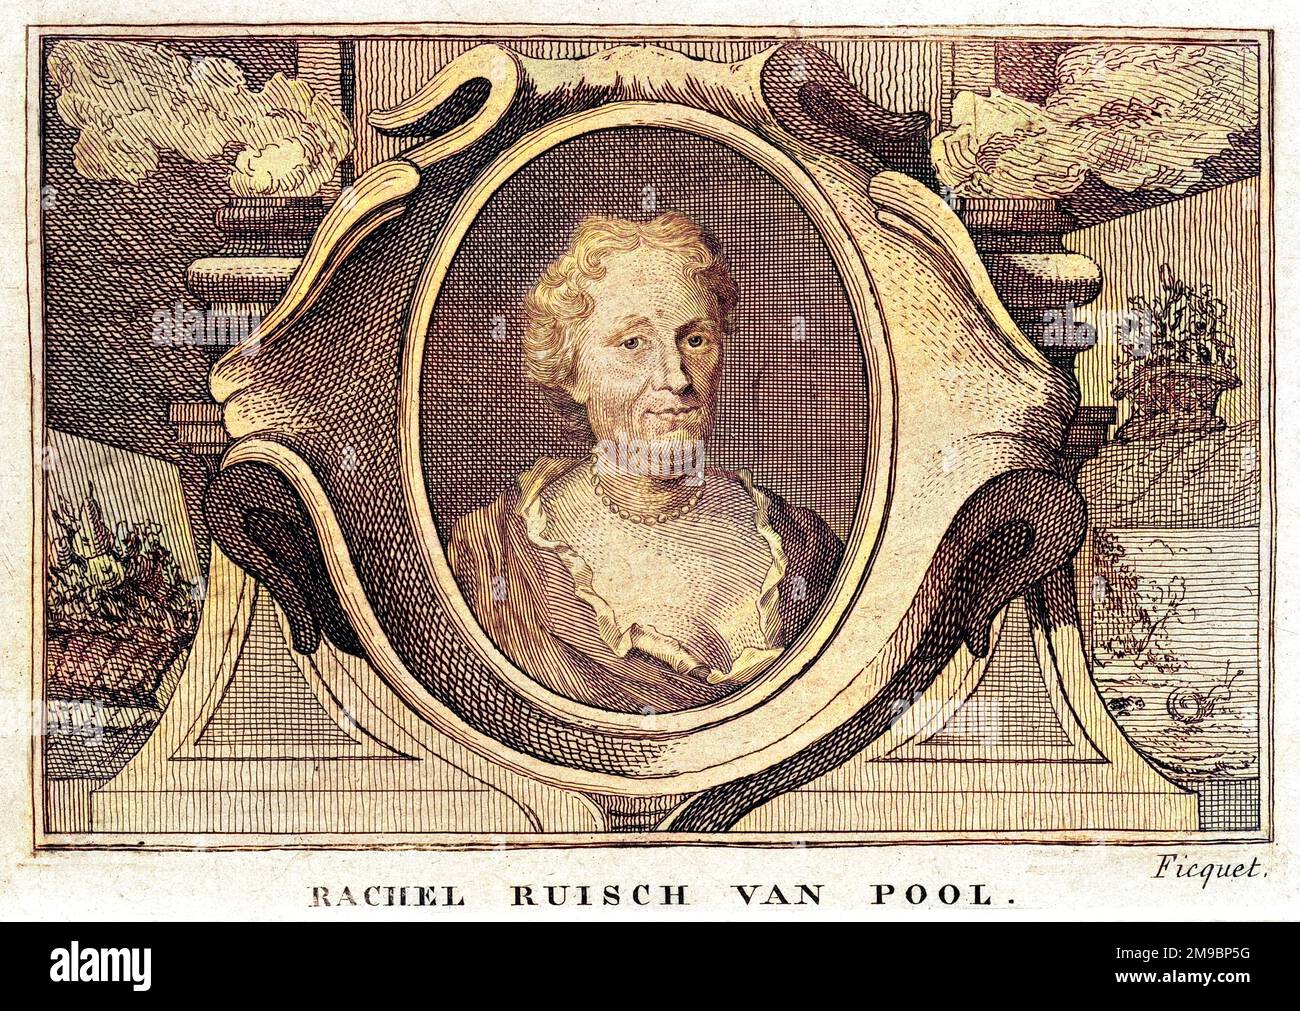 RACHEL RUYSCH VAN POOL artista olandese rinomato per i suoi dipinti floreali. Foto Stock